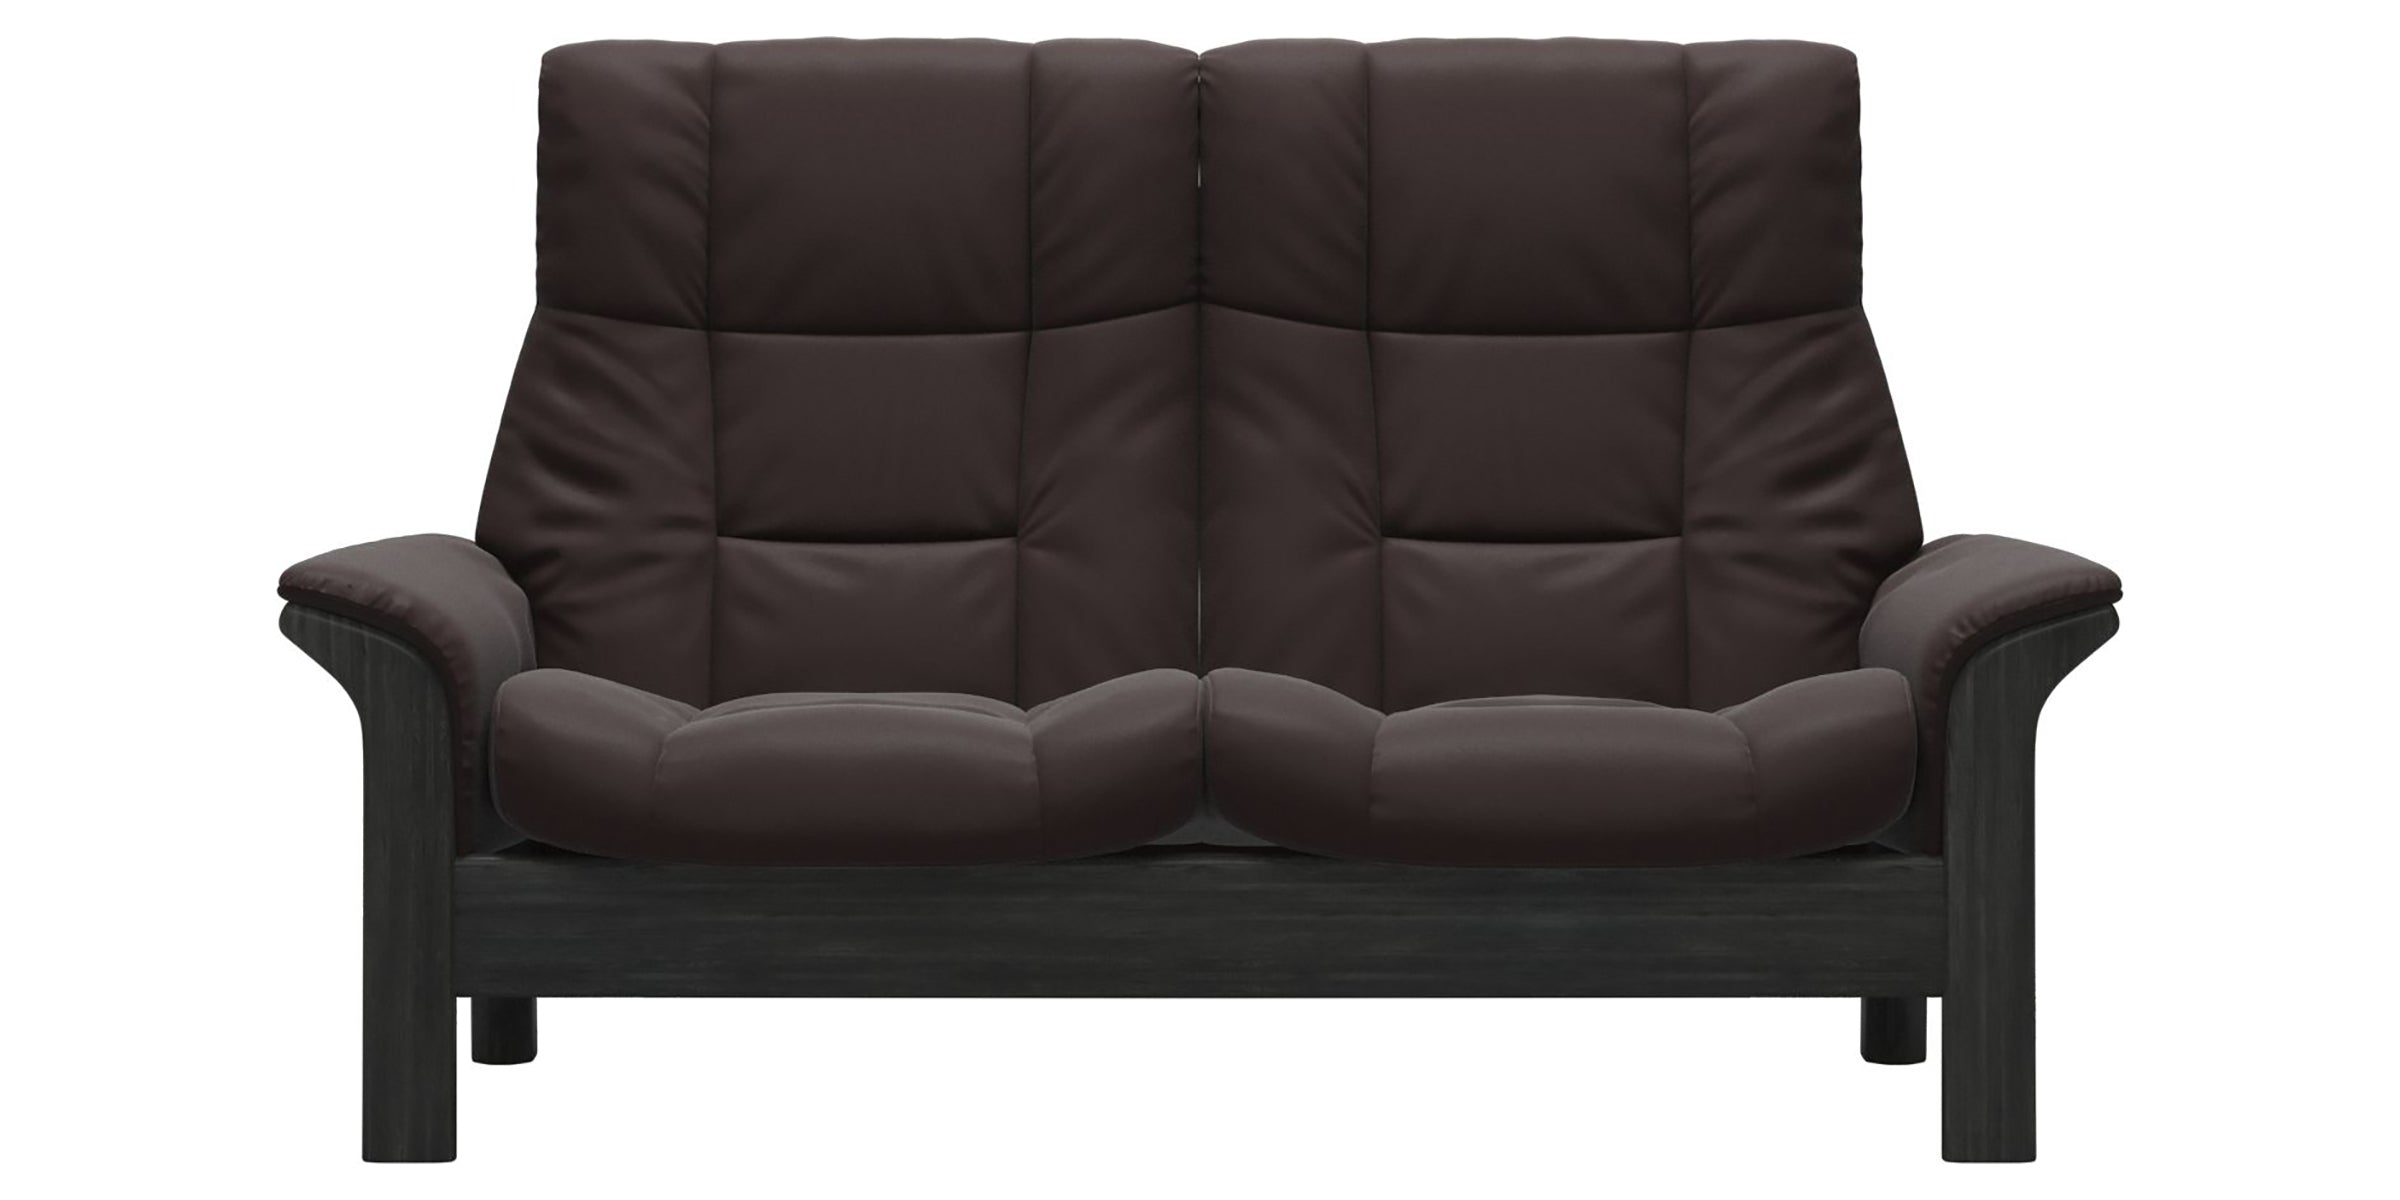 Paloma Leather Chocolate and Grey Base | Stressless Buckingham 2-Seater High Back Sofa | Valley Ridge Furniture